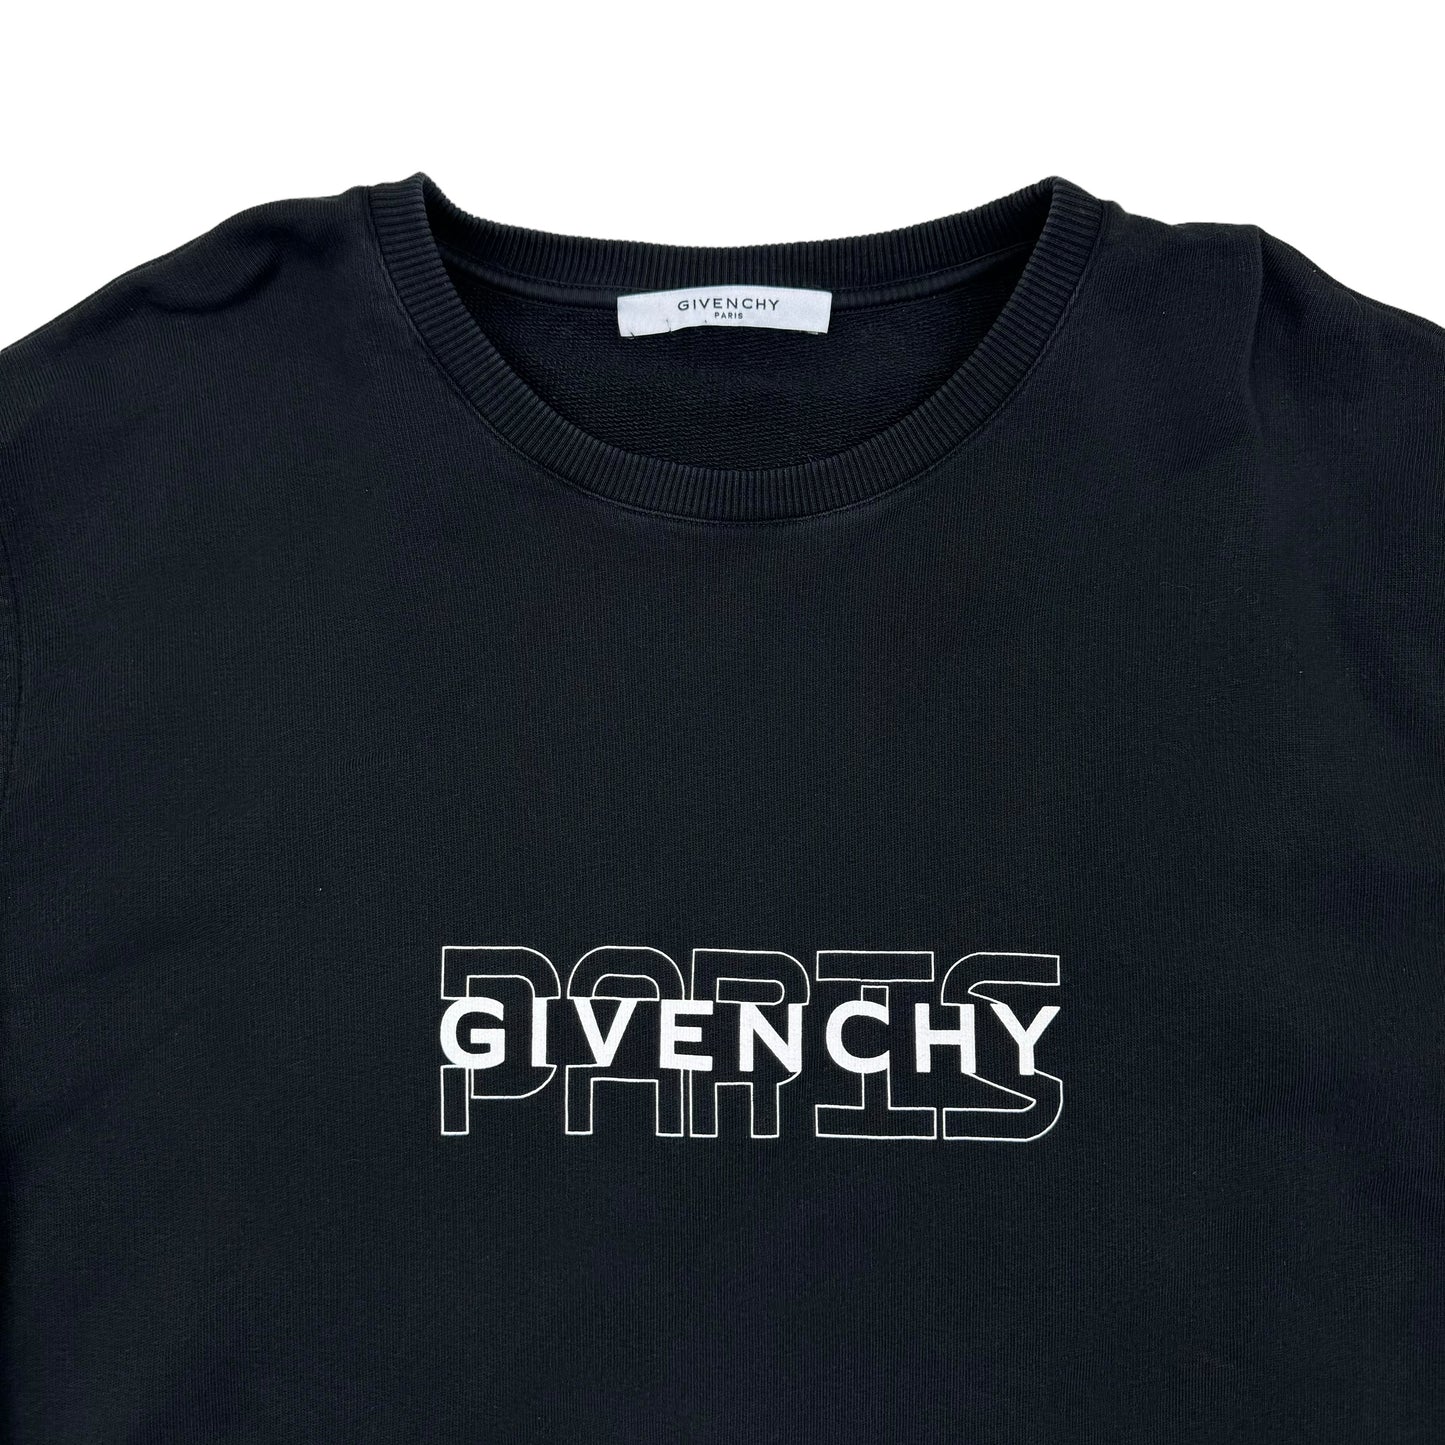 Givenchy Paris Crewneck